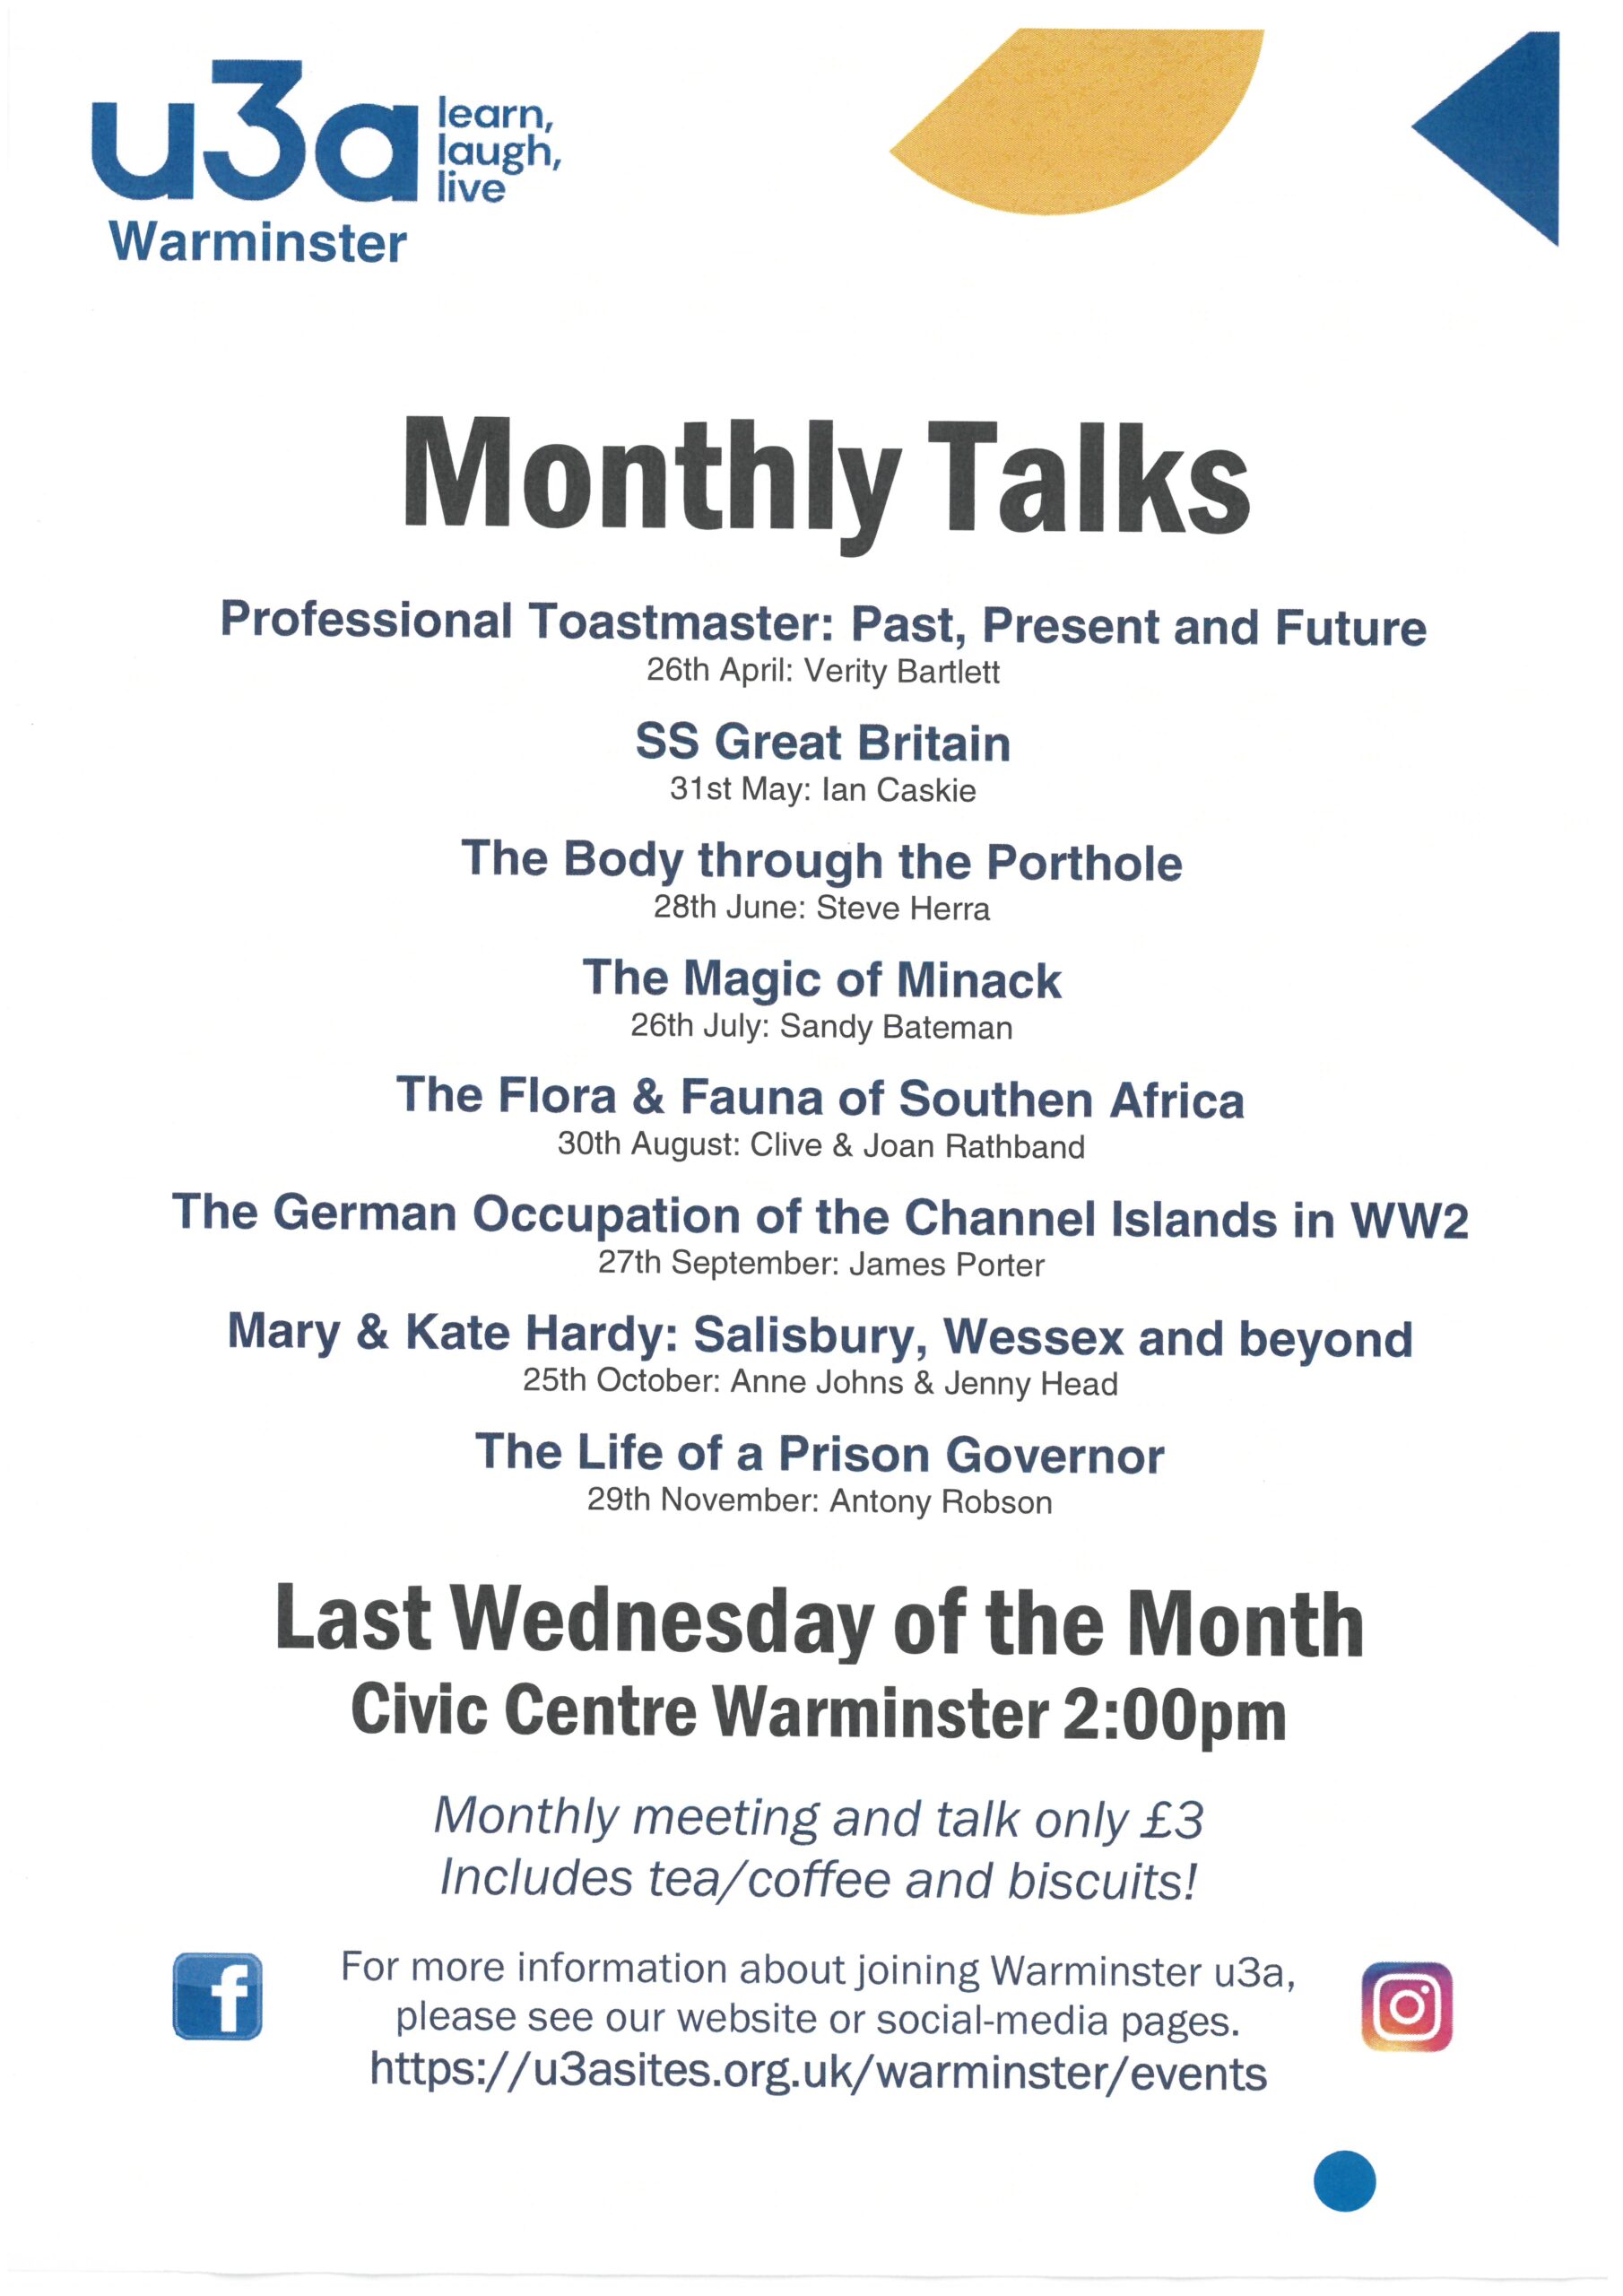 Warminster U3A Monthly Talk - The Body Through the Porthole by Steve Herra